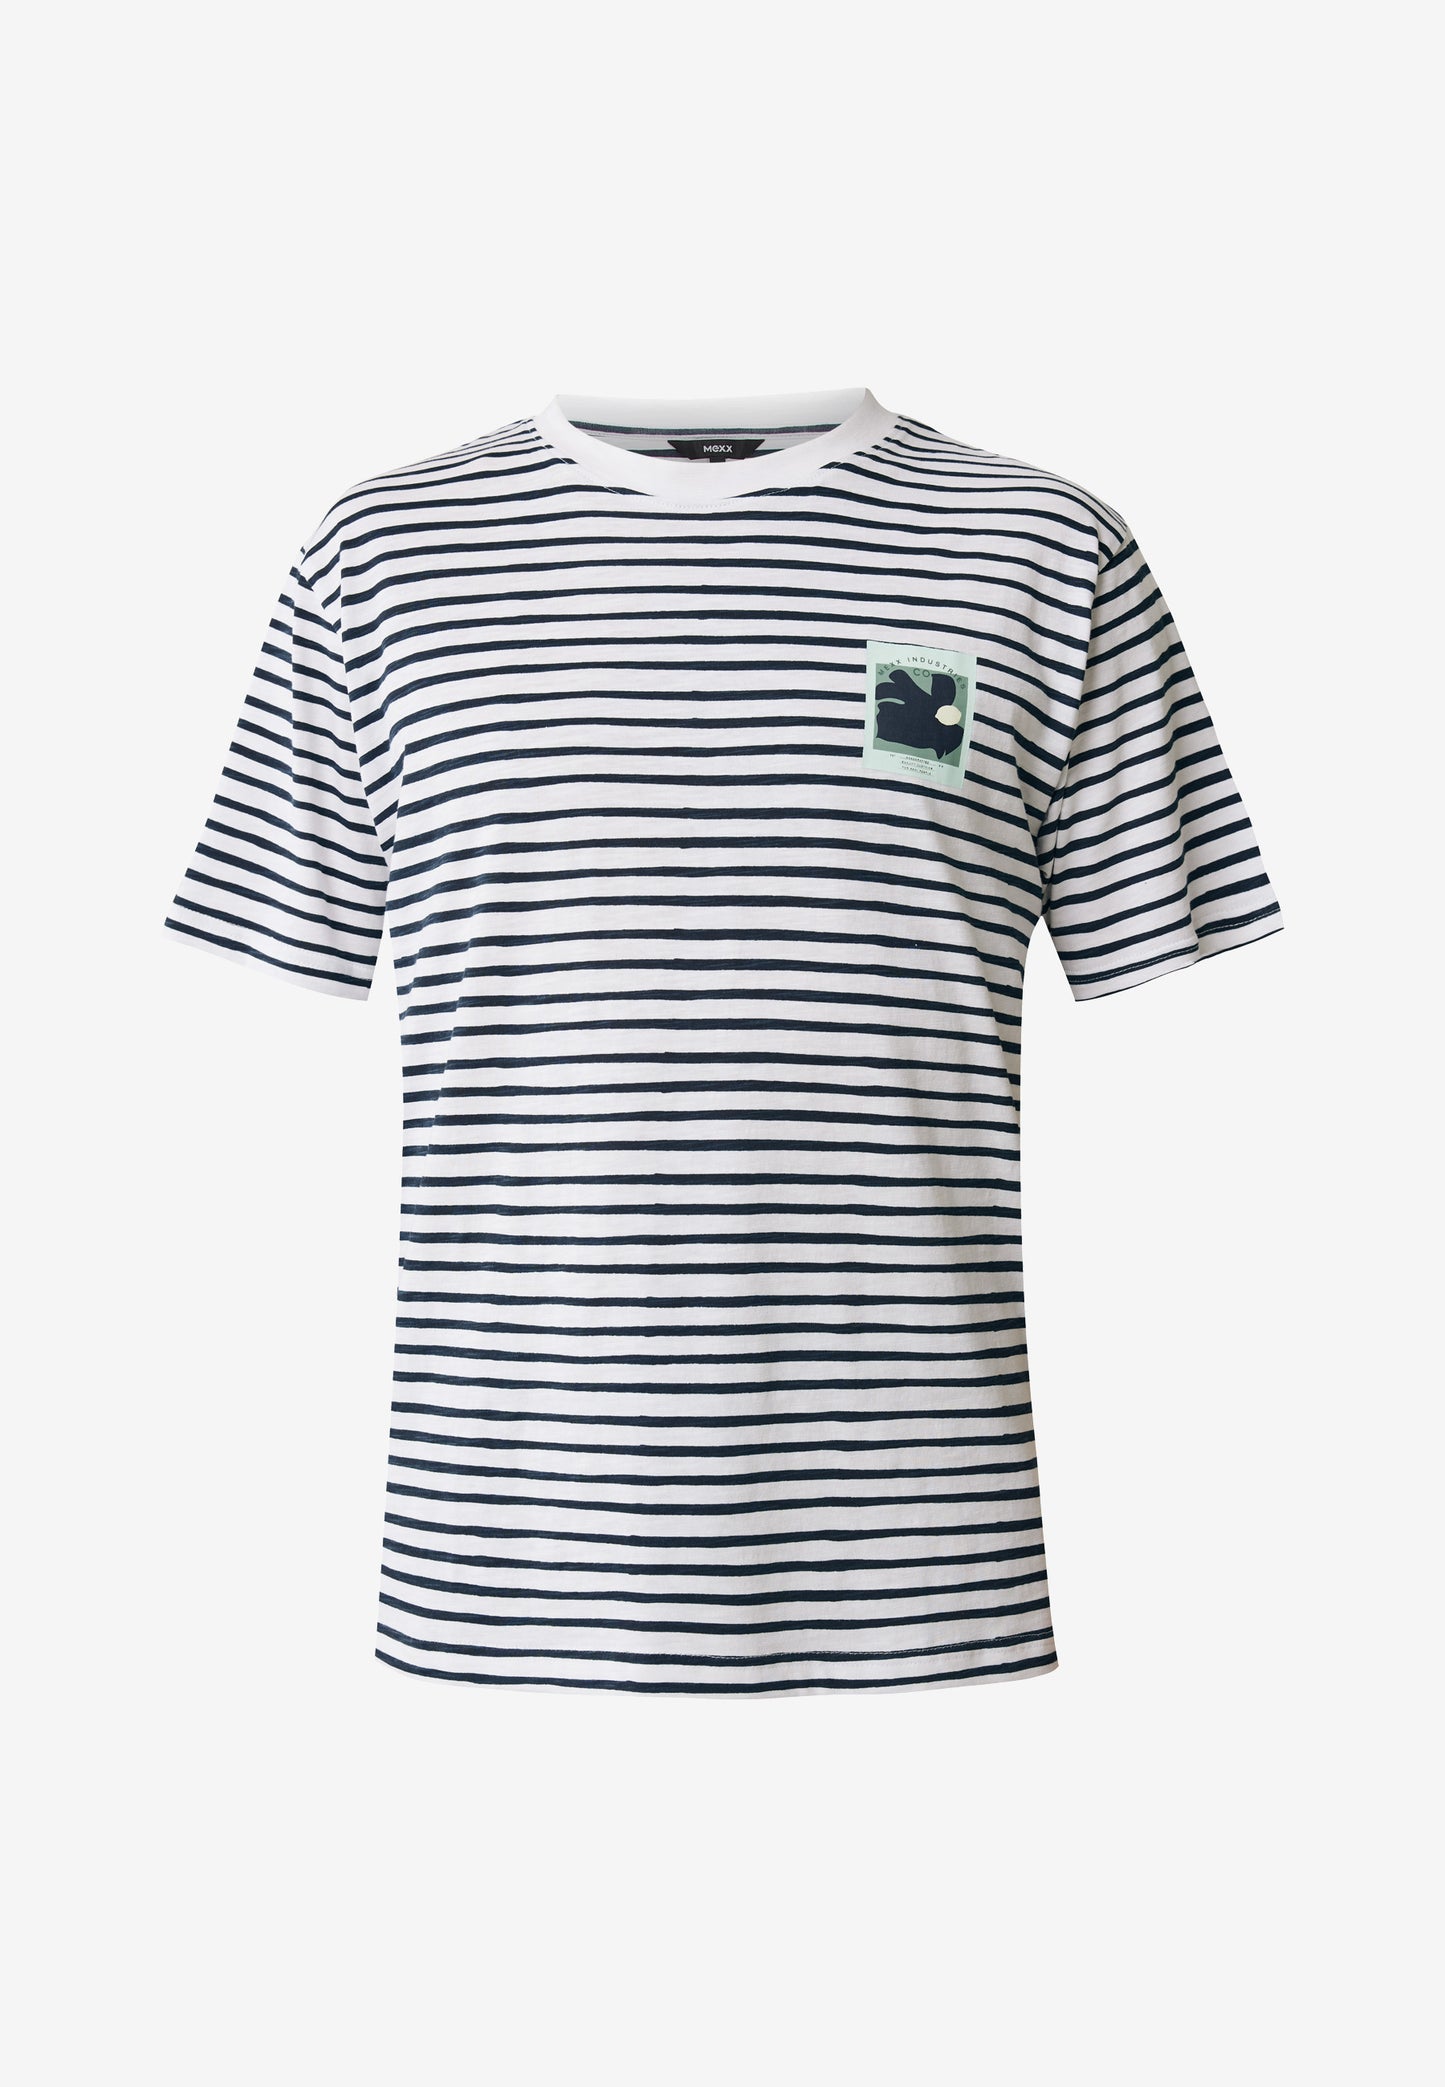 SS Chest Print Striped T-Shirt